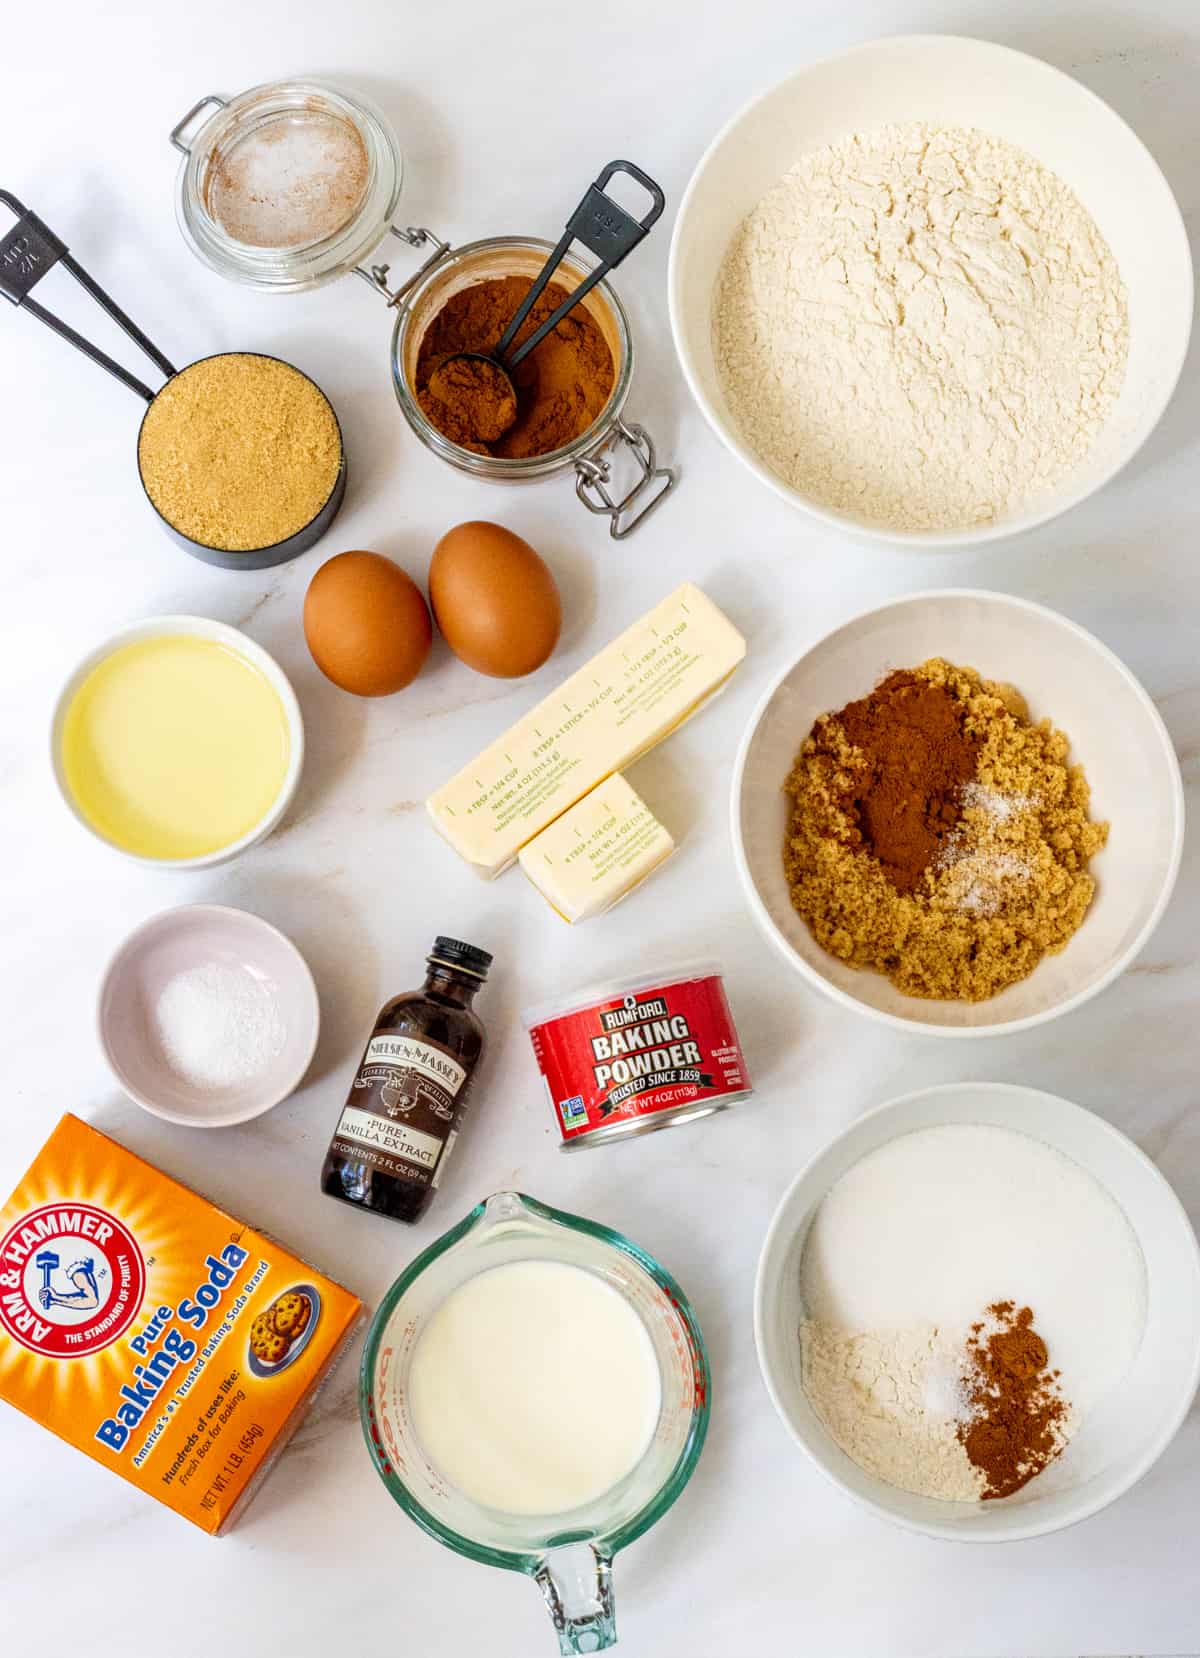 Ingredients for cinnamon streusel muffins.